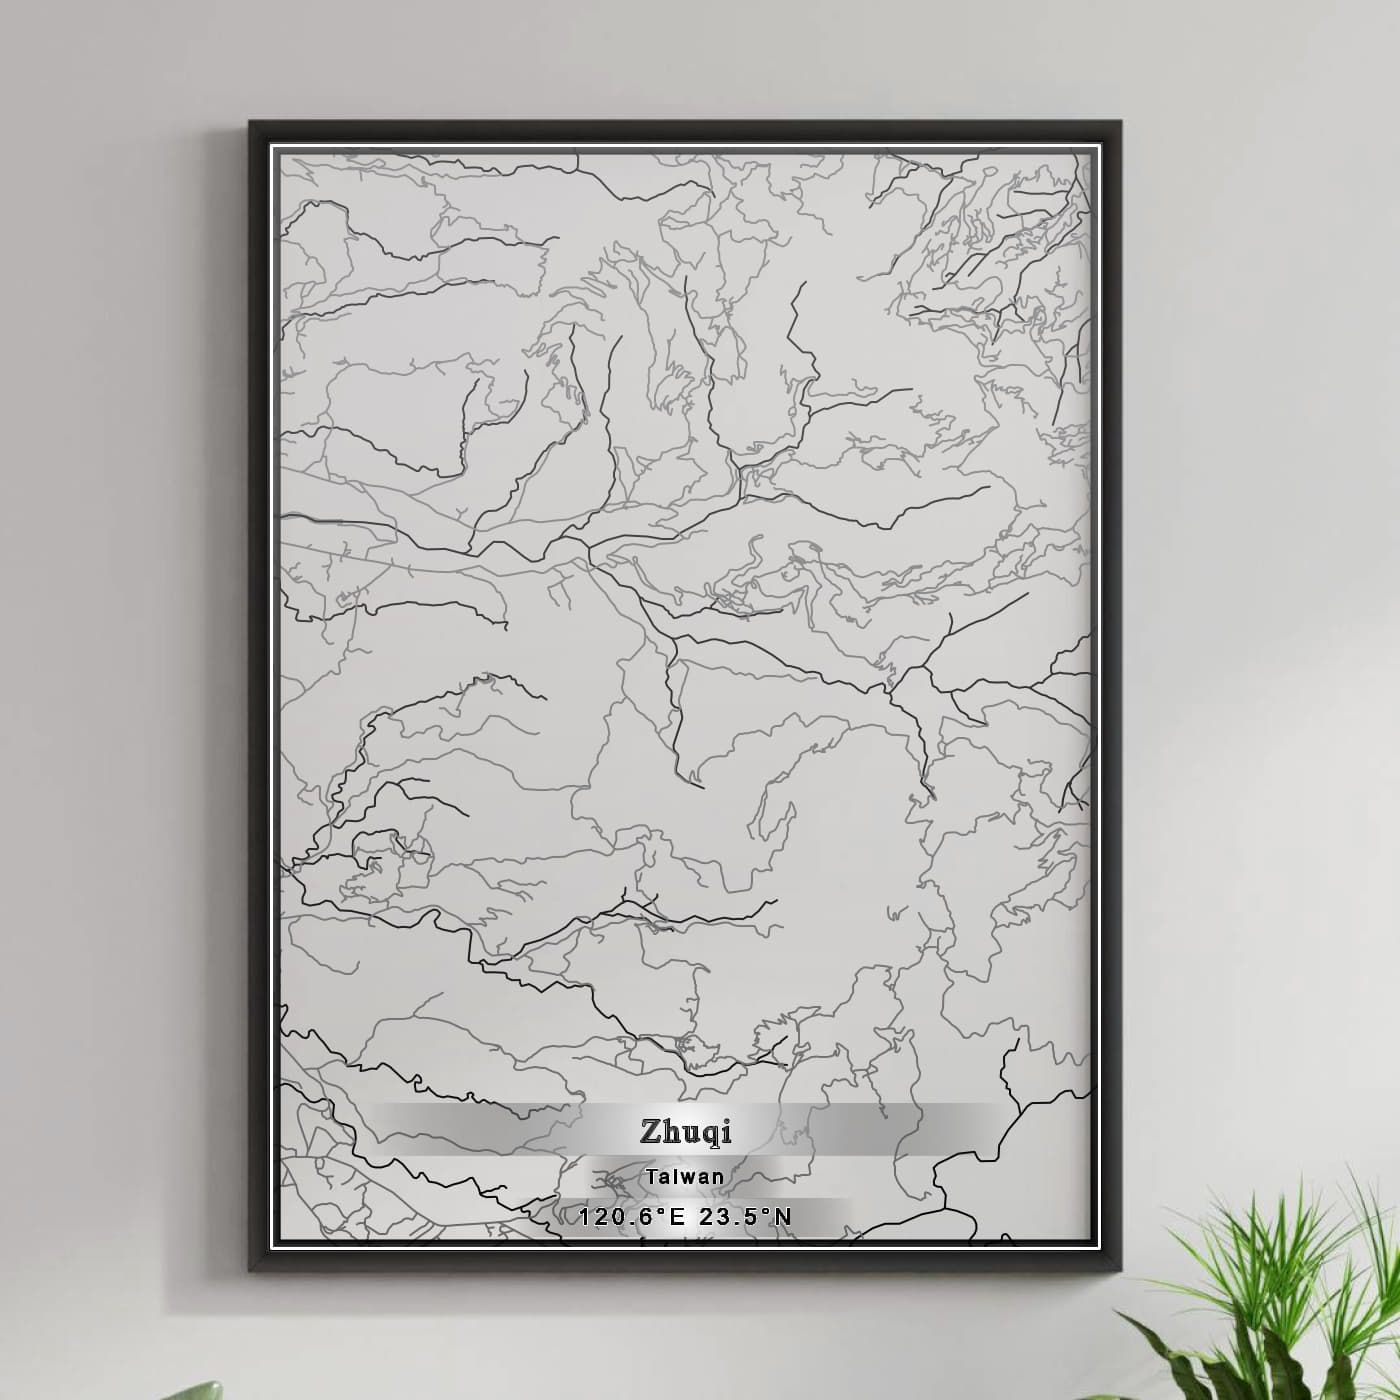 ROAD MAP OF ZHUQI, TAIWAN BY MAPBAKES